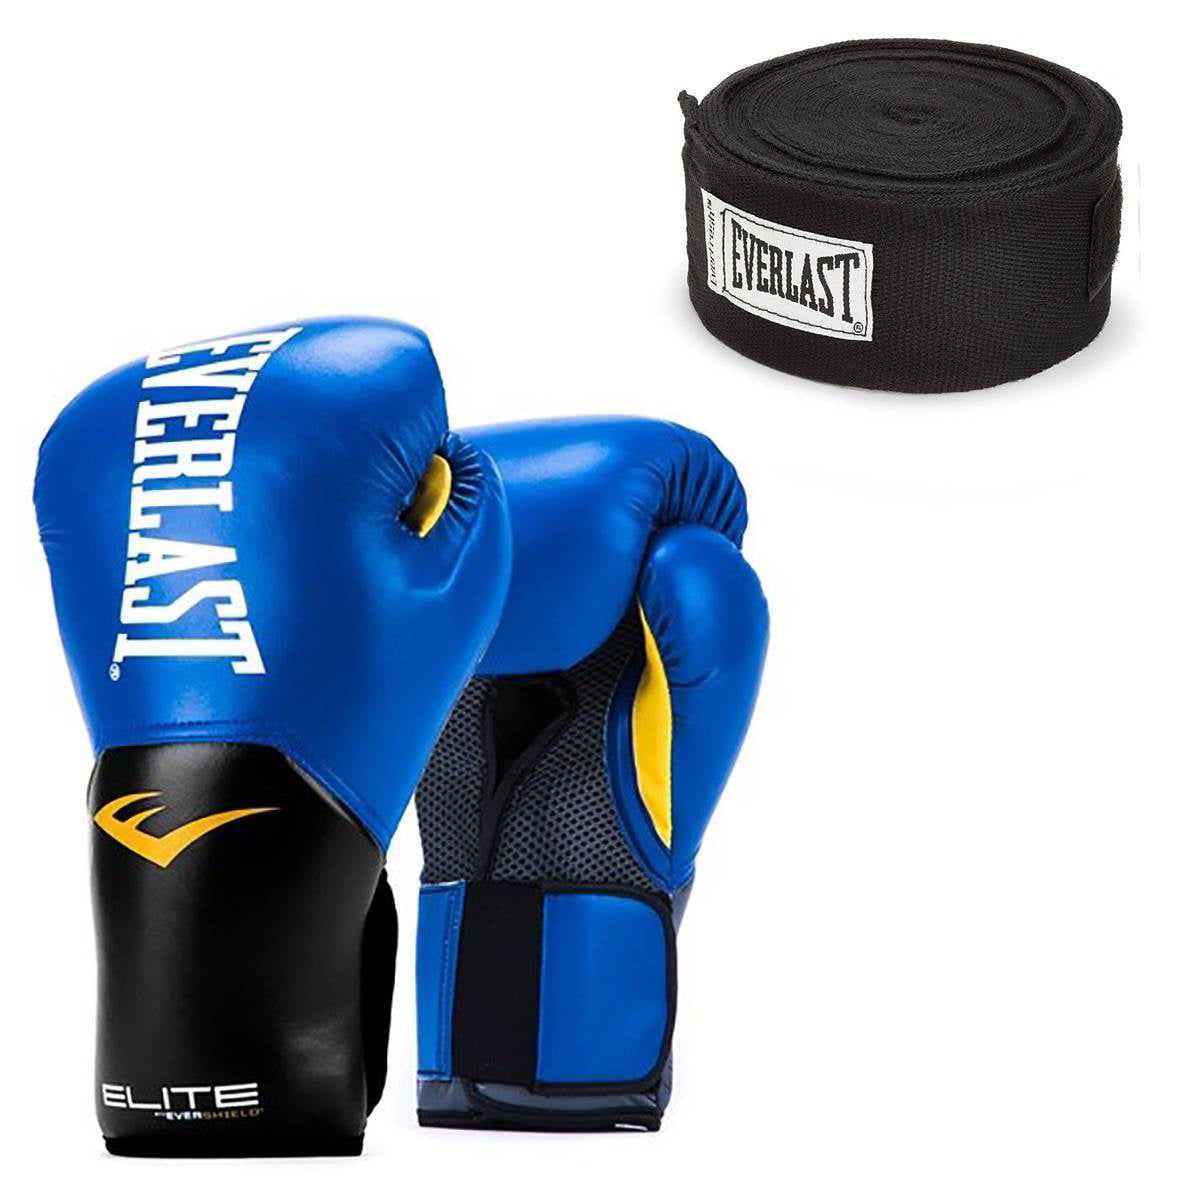 Details about   Everlast Pro Style Elite Training Boxing Size 14 Oz Gloves Evershield Blue Lime 